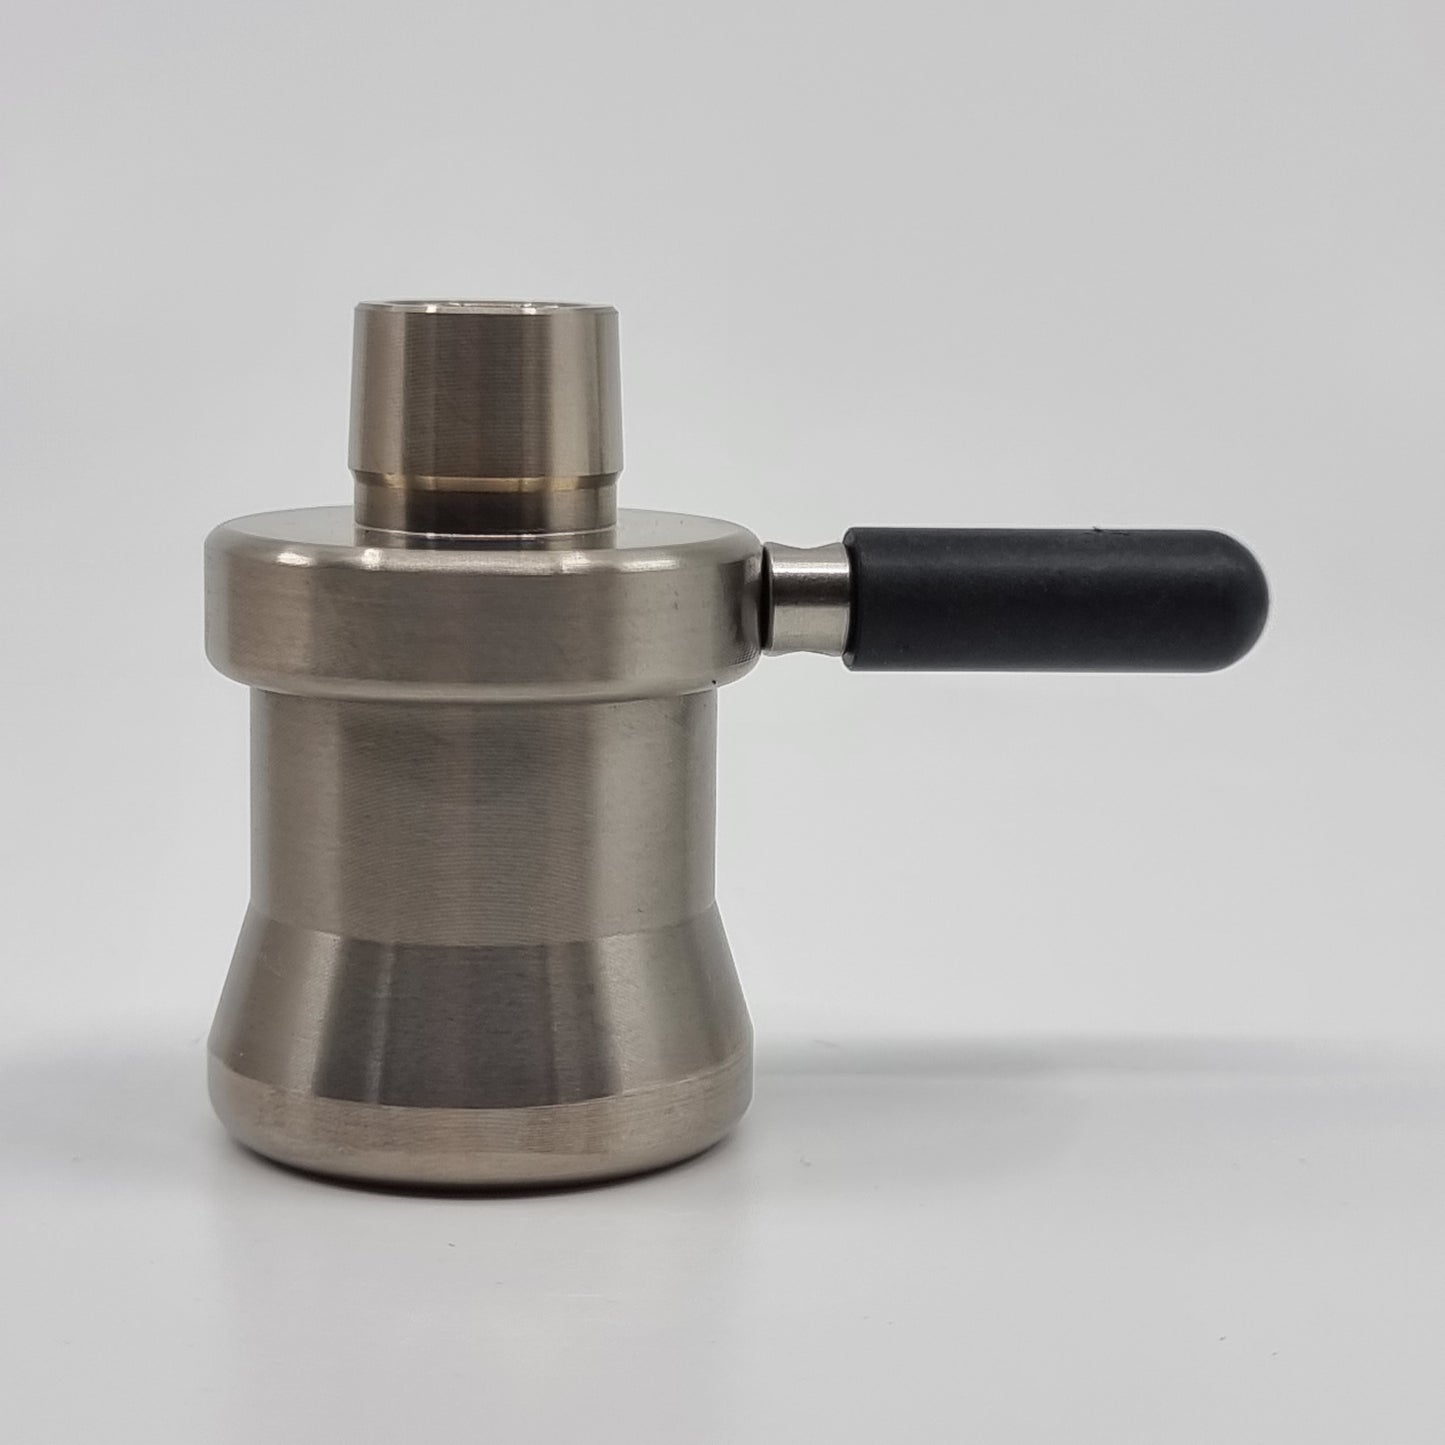 XL Titanium Adapter Bowl 18mm by QaromaShop